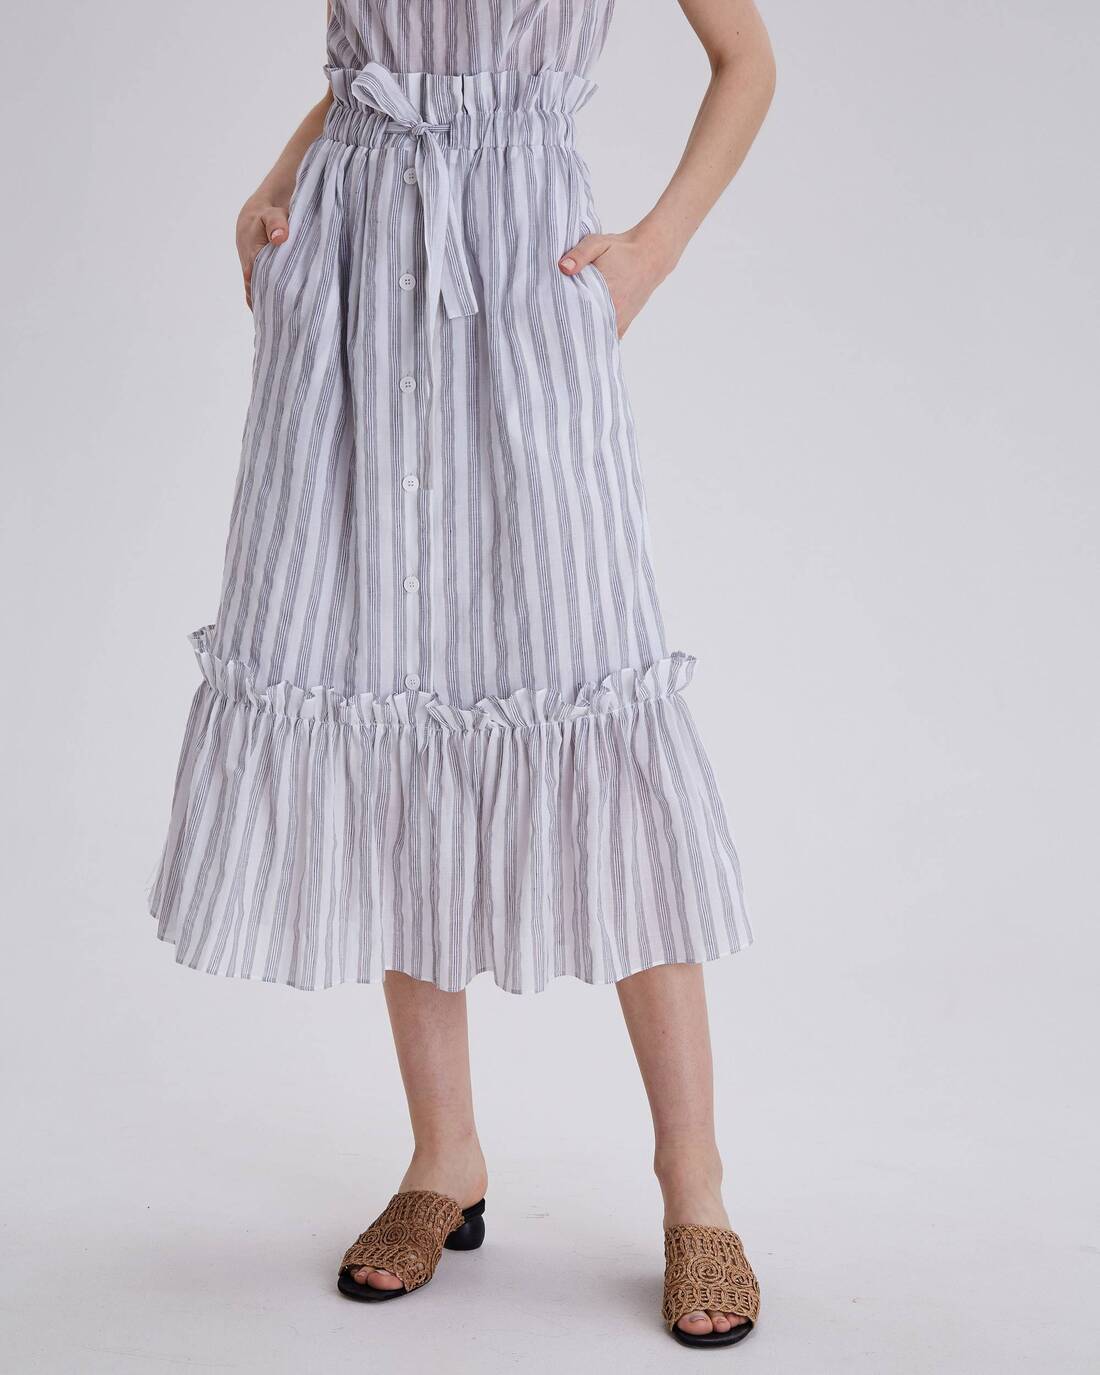 Midi-length skirt with volant